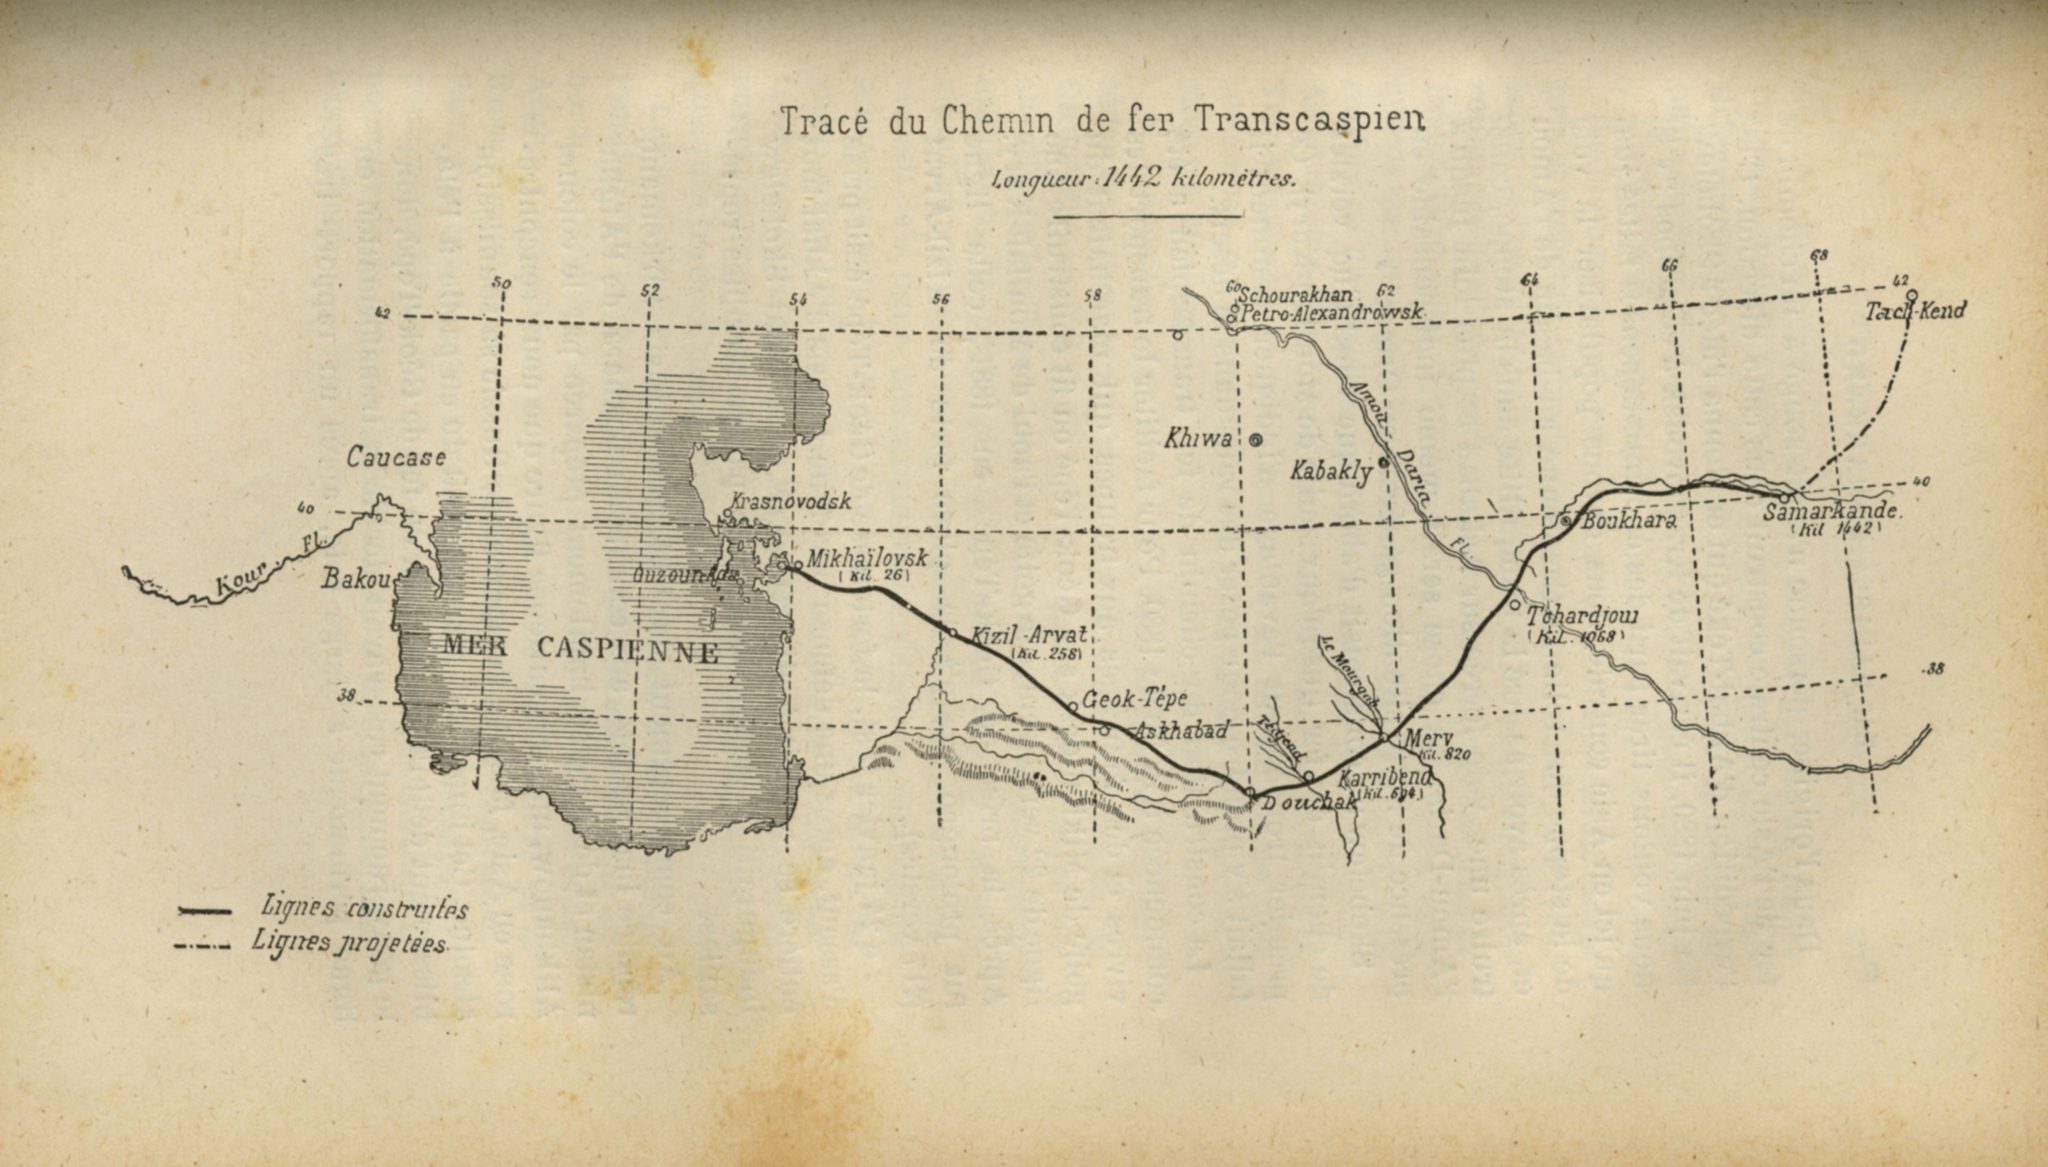 Tracé du Chemin de fer Transcaspien 1888